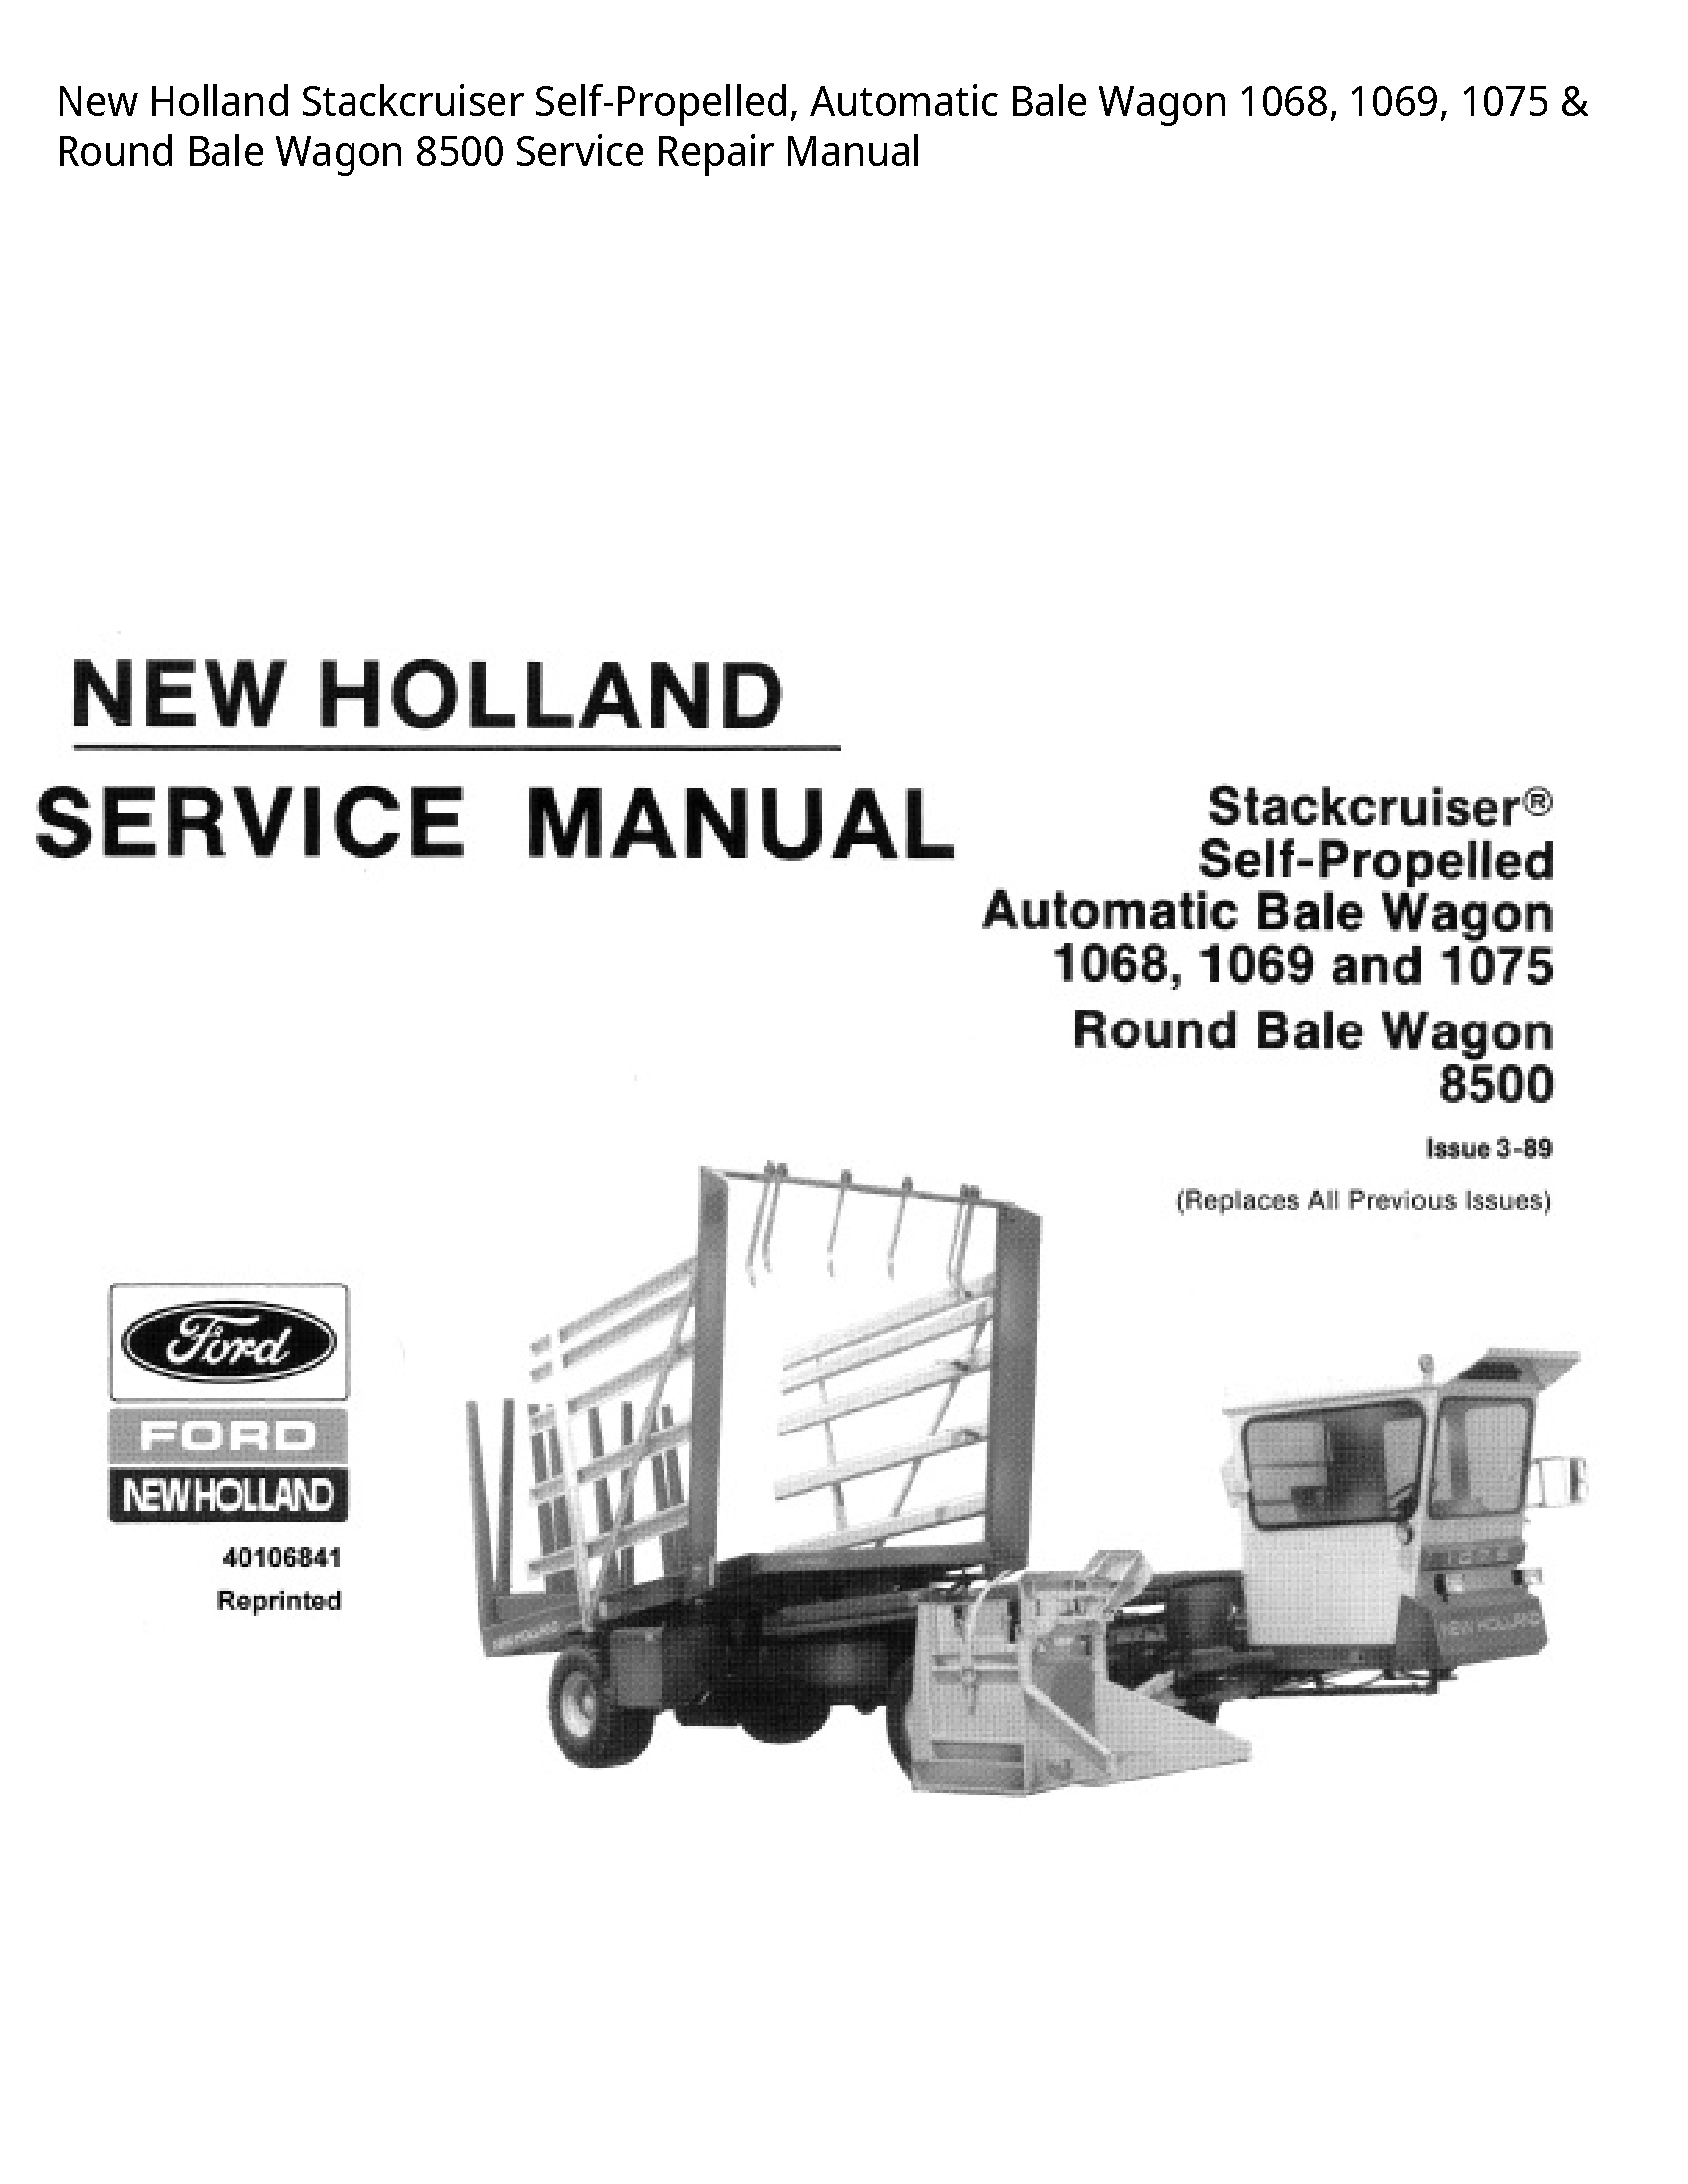 New Holland 1068 Stackcruiser Self-Propelled manual